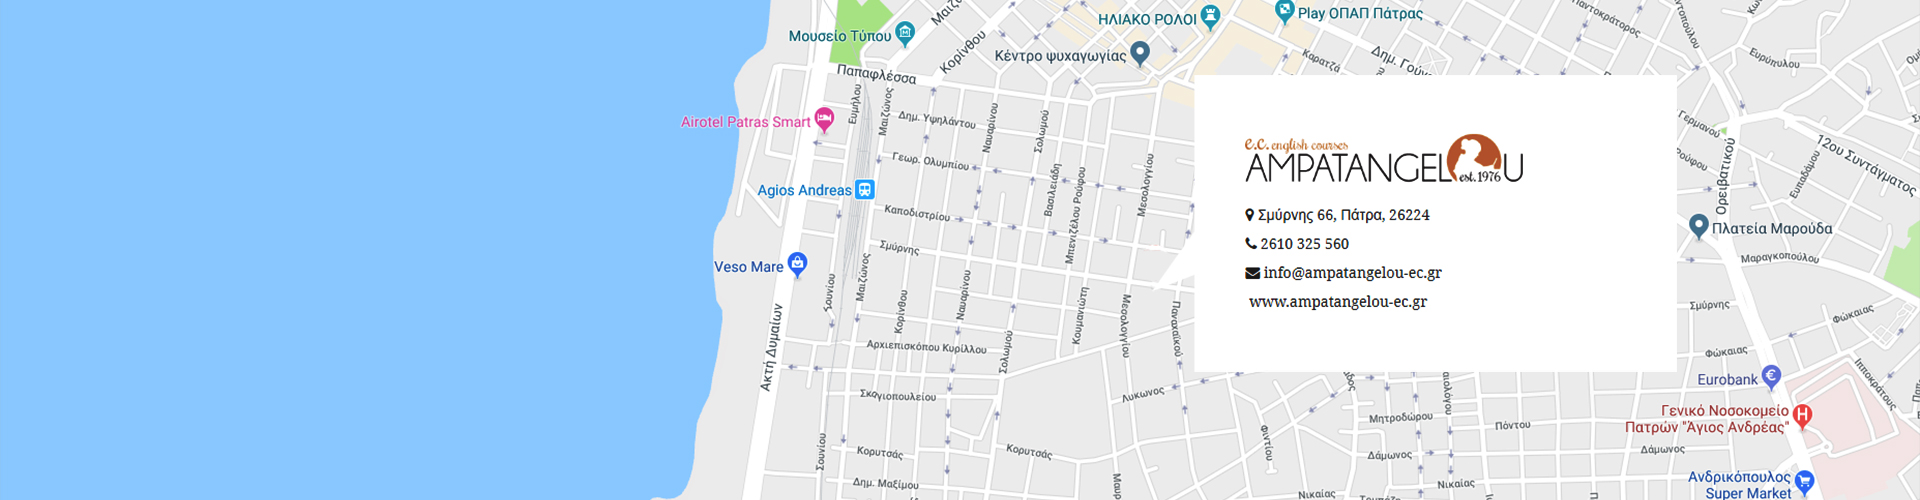 Ampatangelou EC on google maps